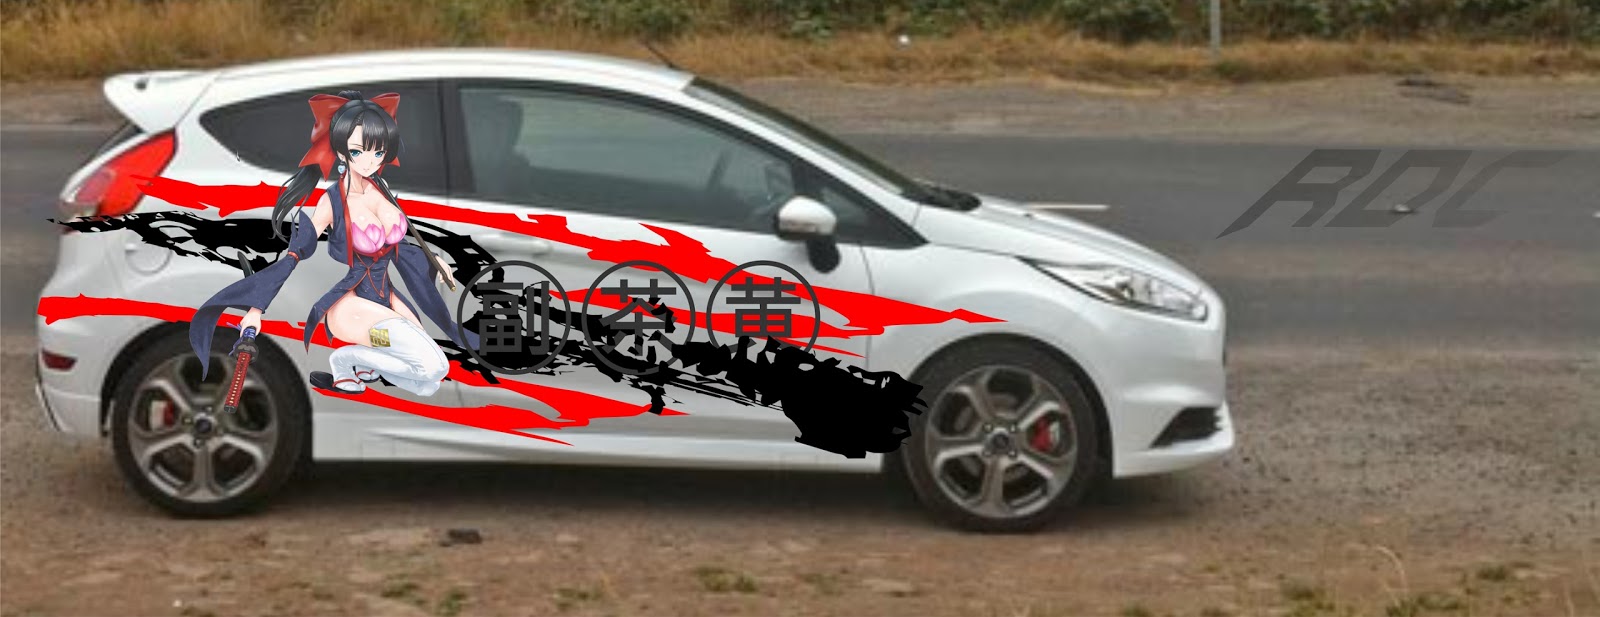 Gambar Cutting Sticker Mobil Etios Valco Duniaotto